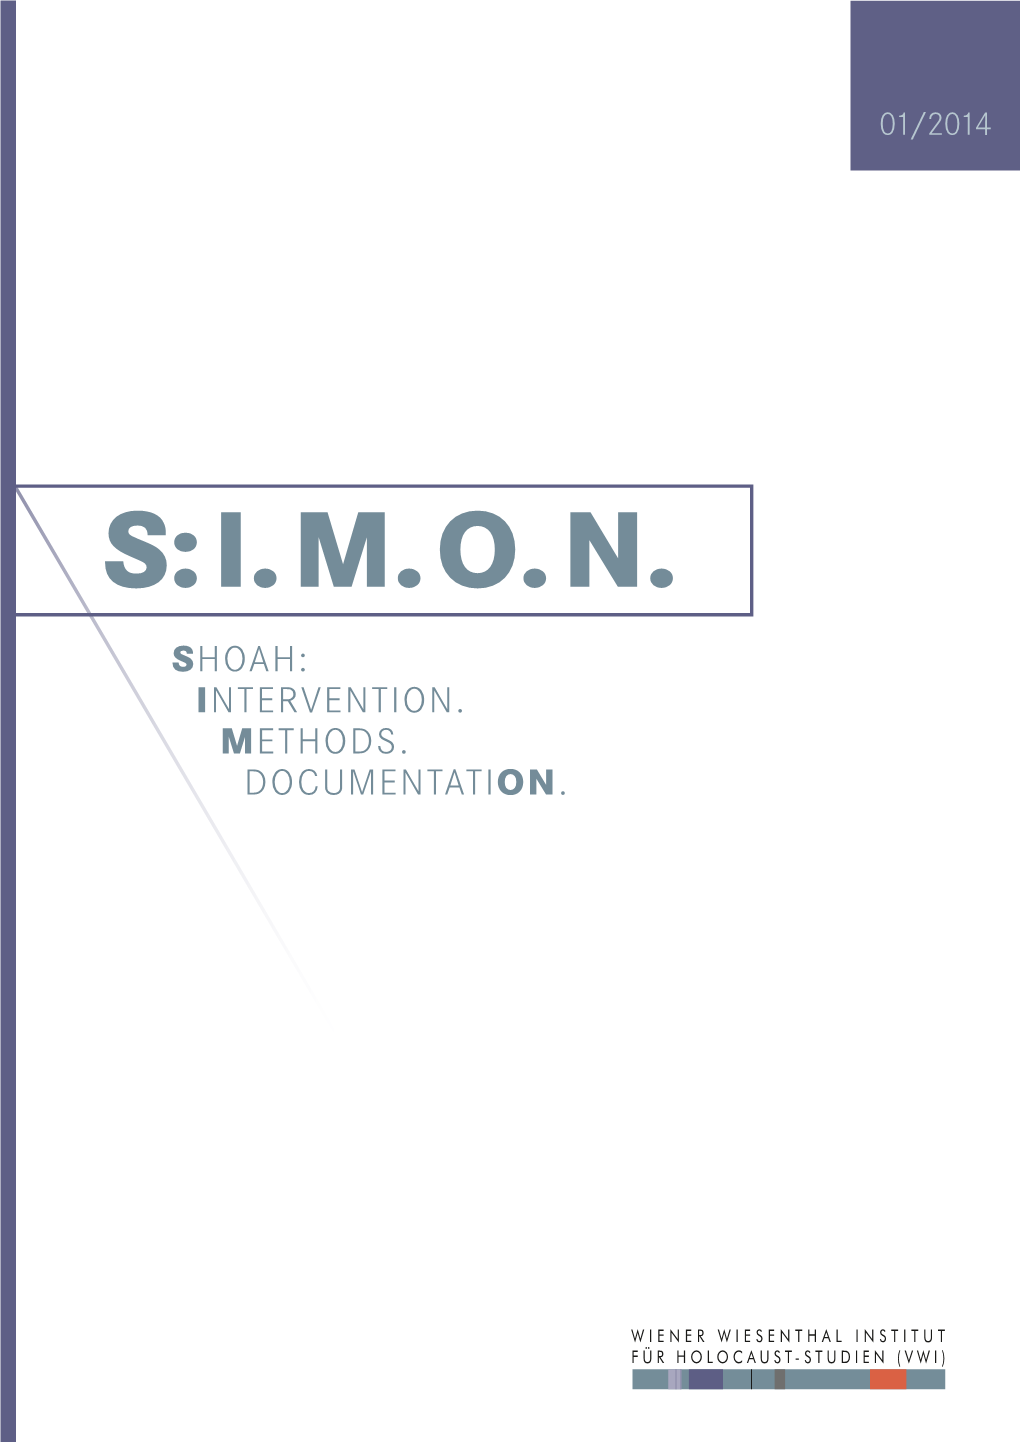 Shoah: Intervention. Methods. Documentation. S:I.M.O.N